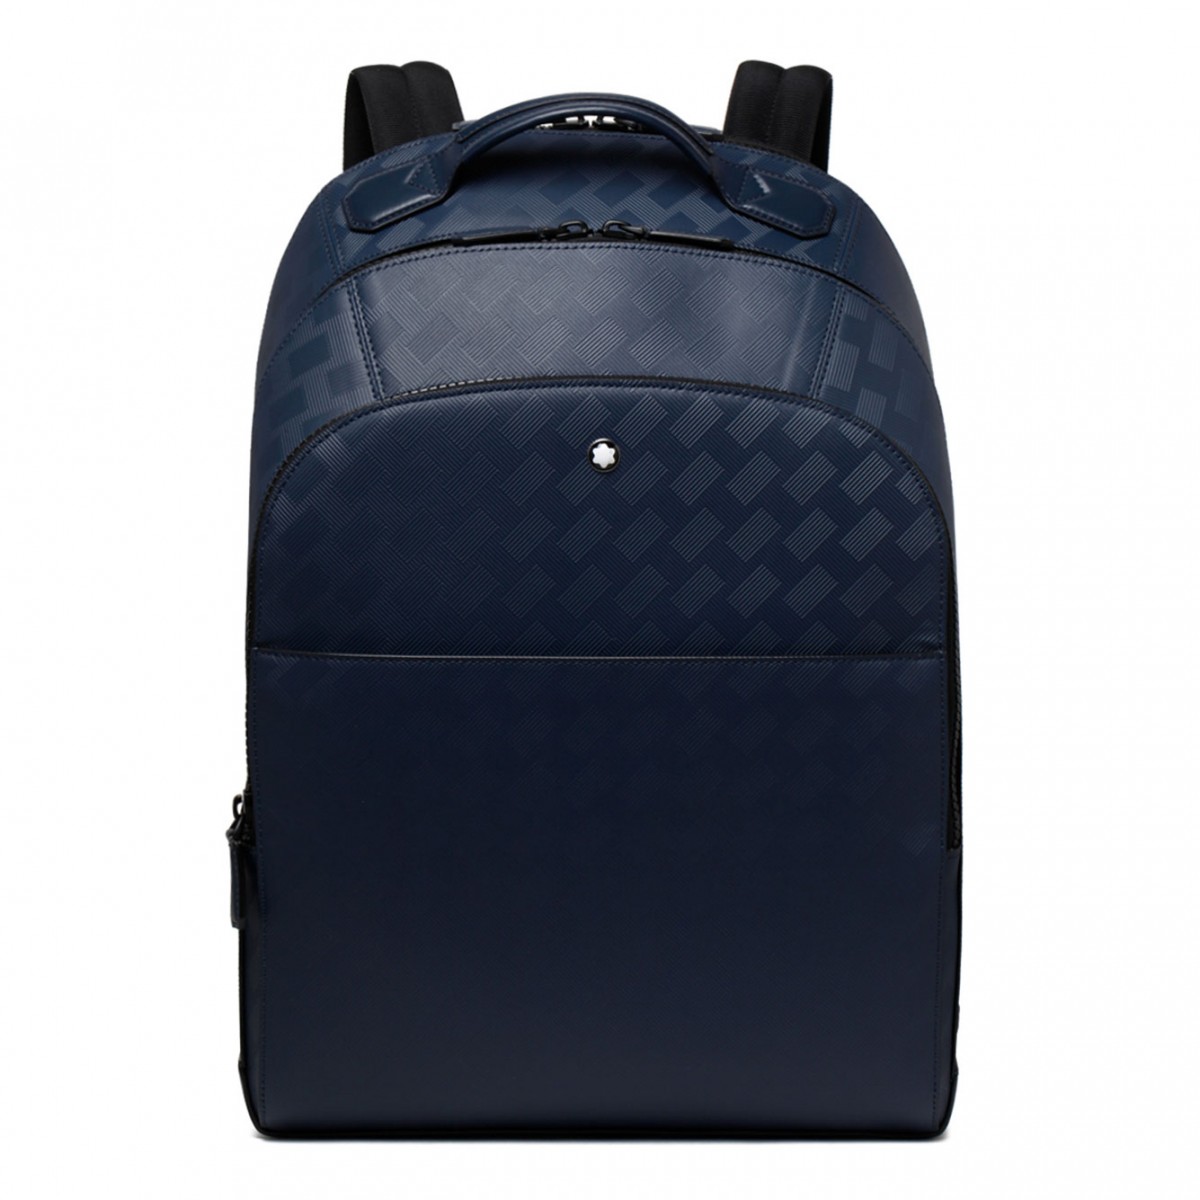 Extreme 3.0 Large Backpack